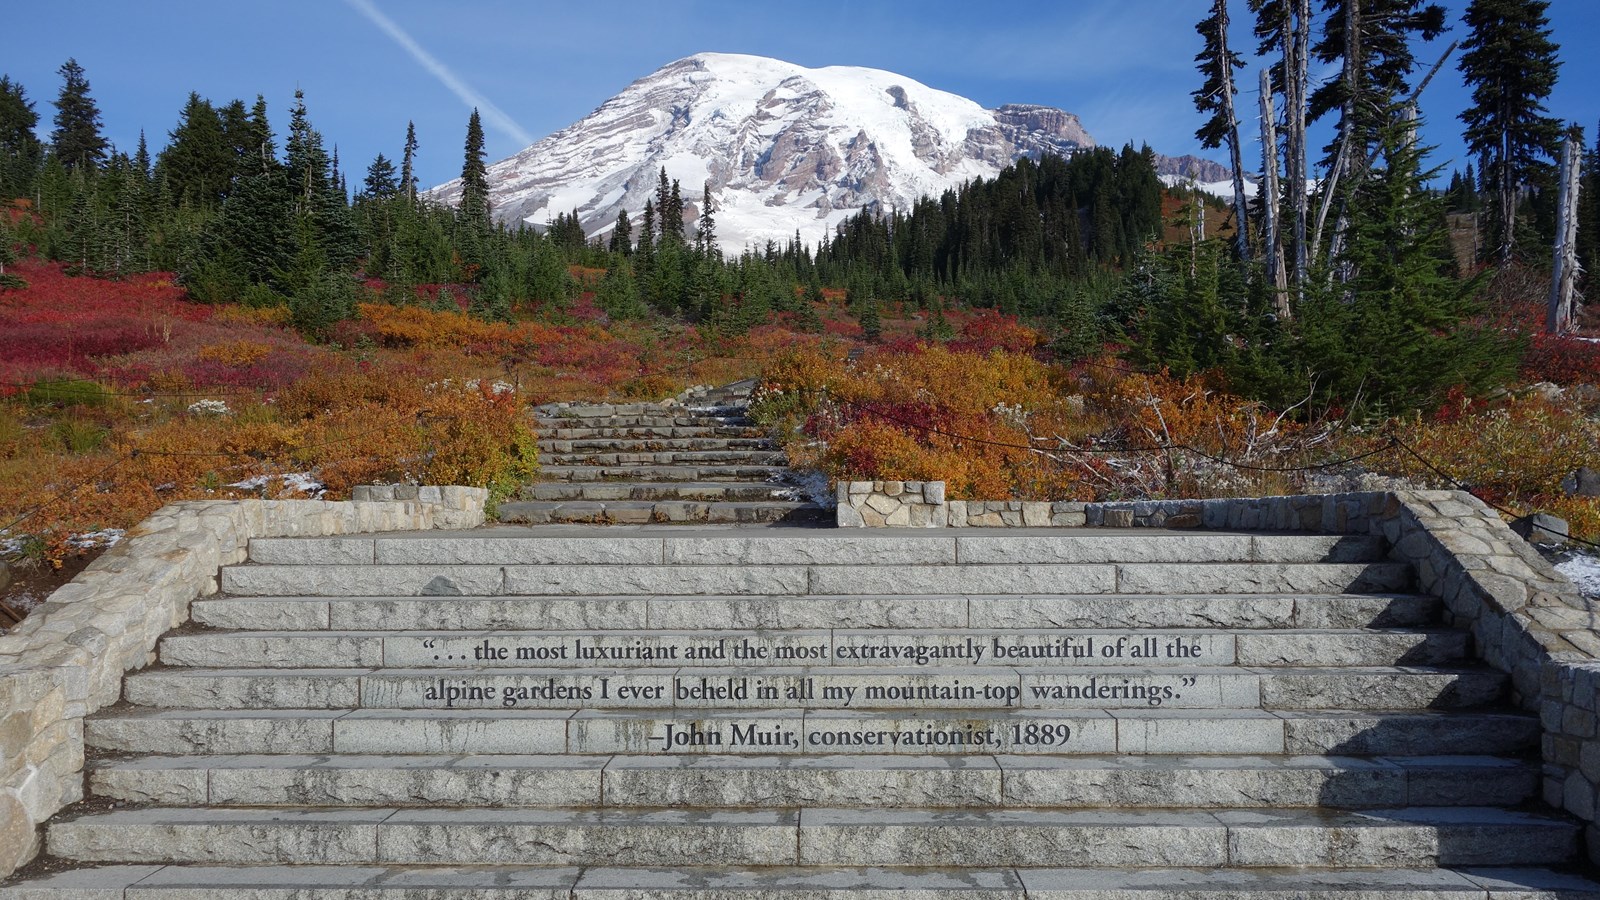 Stone steps lead towards the glaciated peak of Mount Rainier framed by red-orange fall foliage.